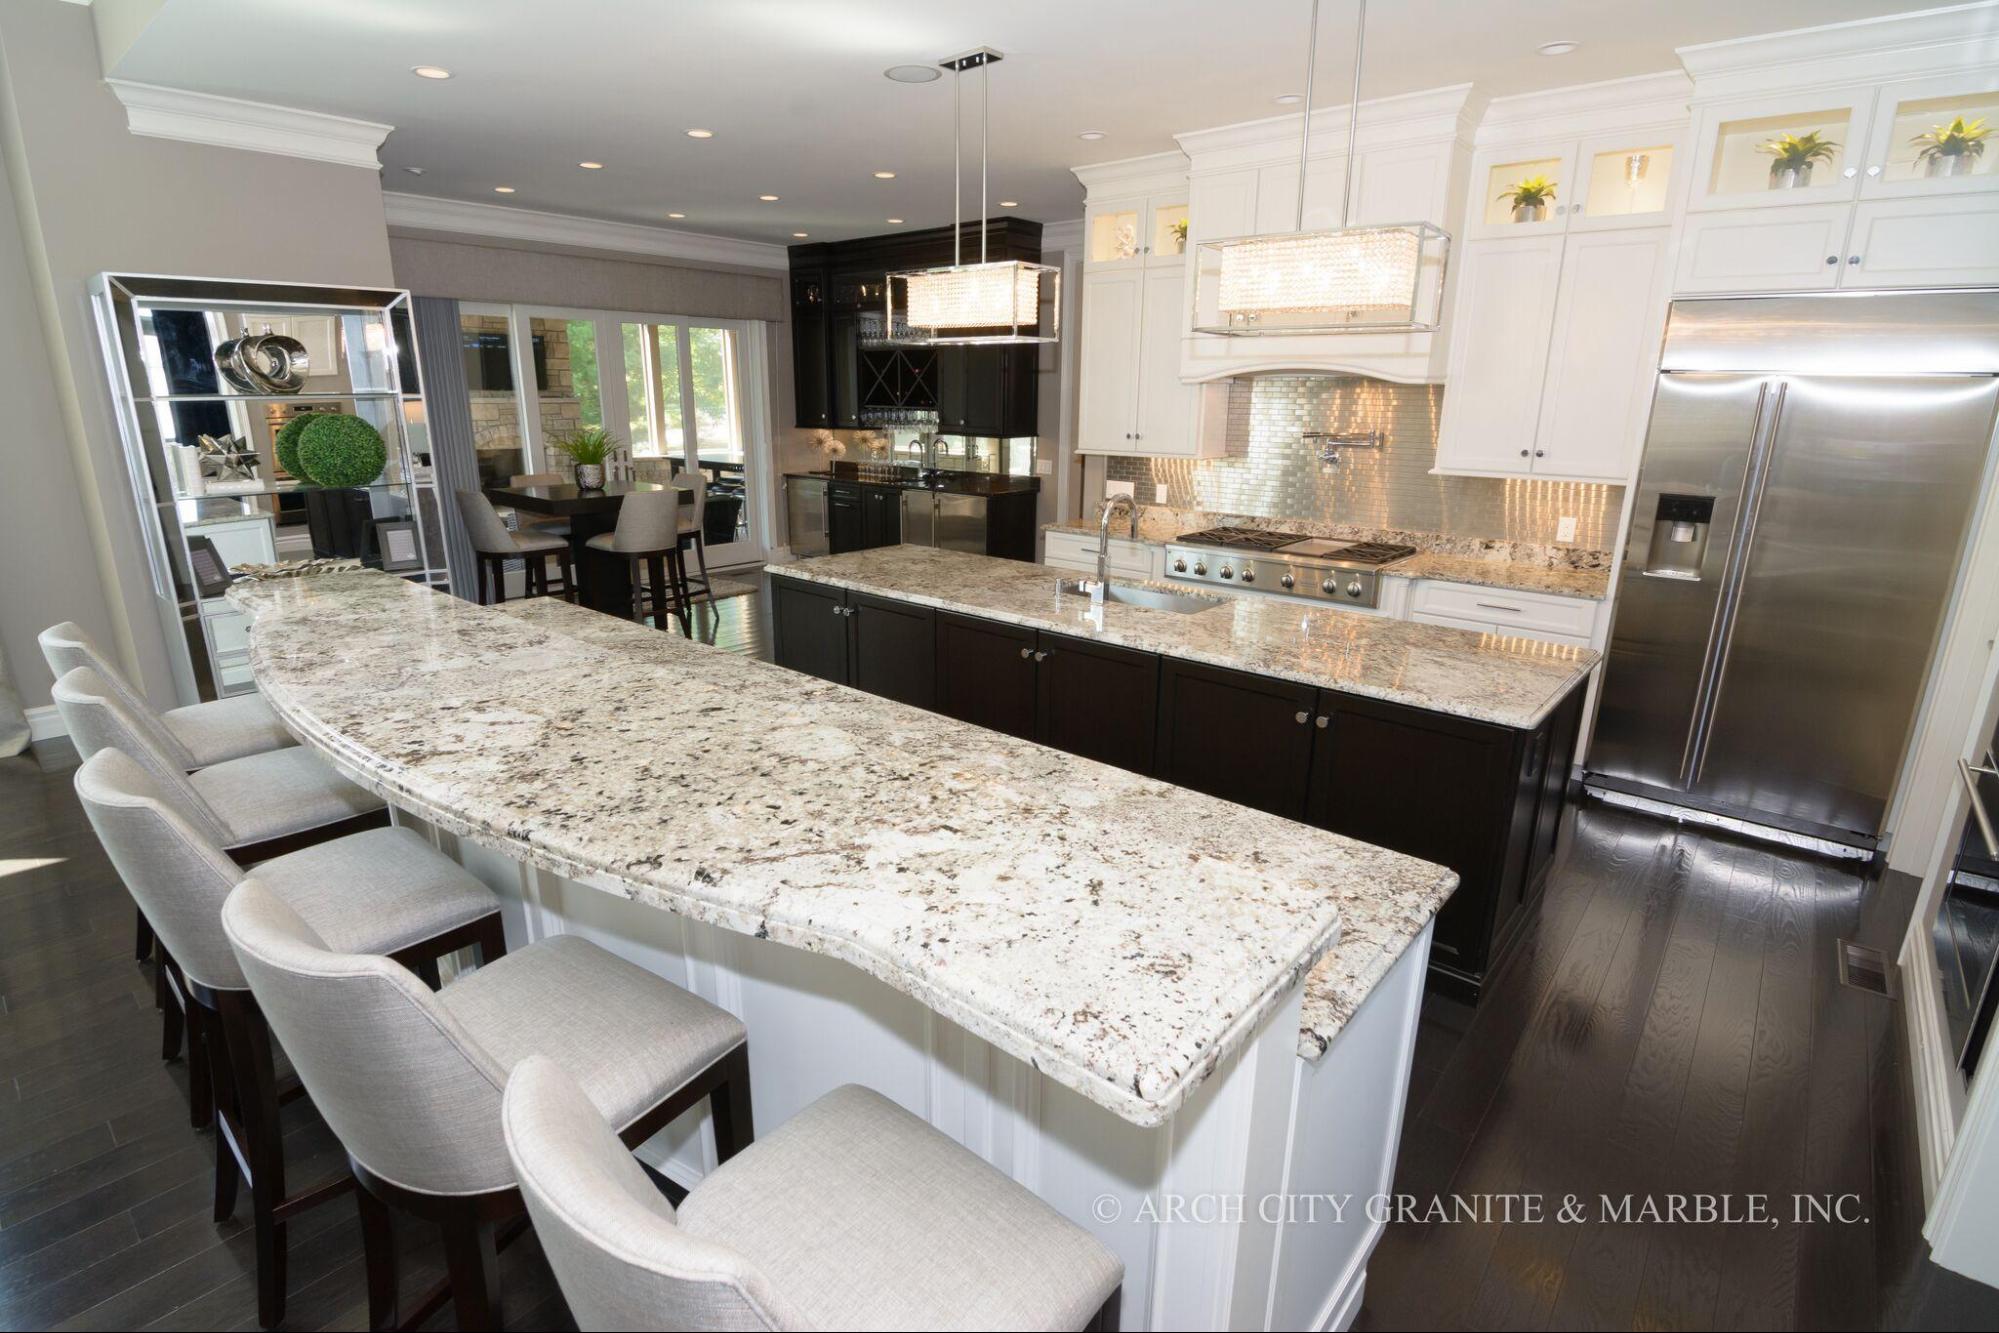 Alaska White An Elegant White Granite For Modern Kitchens,What Colors Go With Light Olive Green